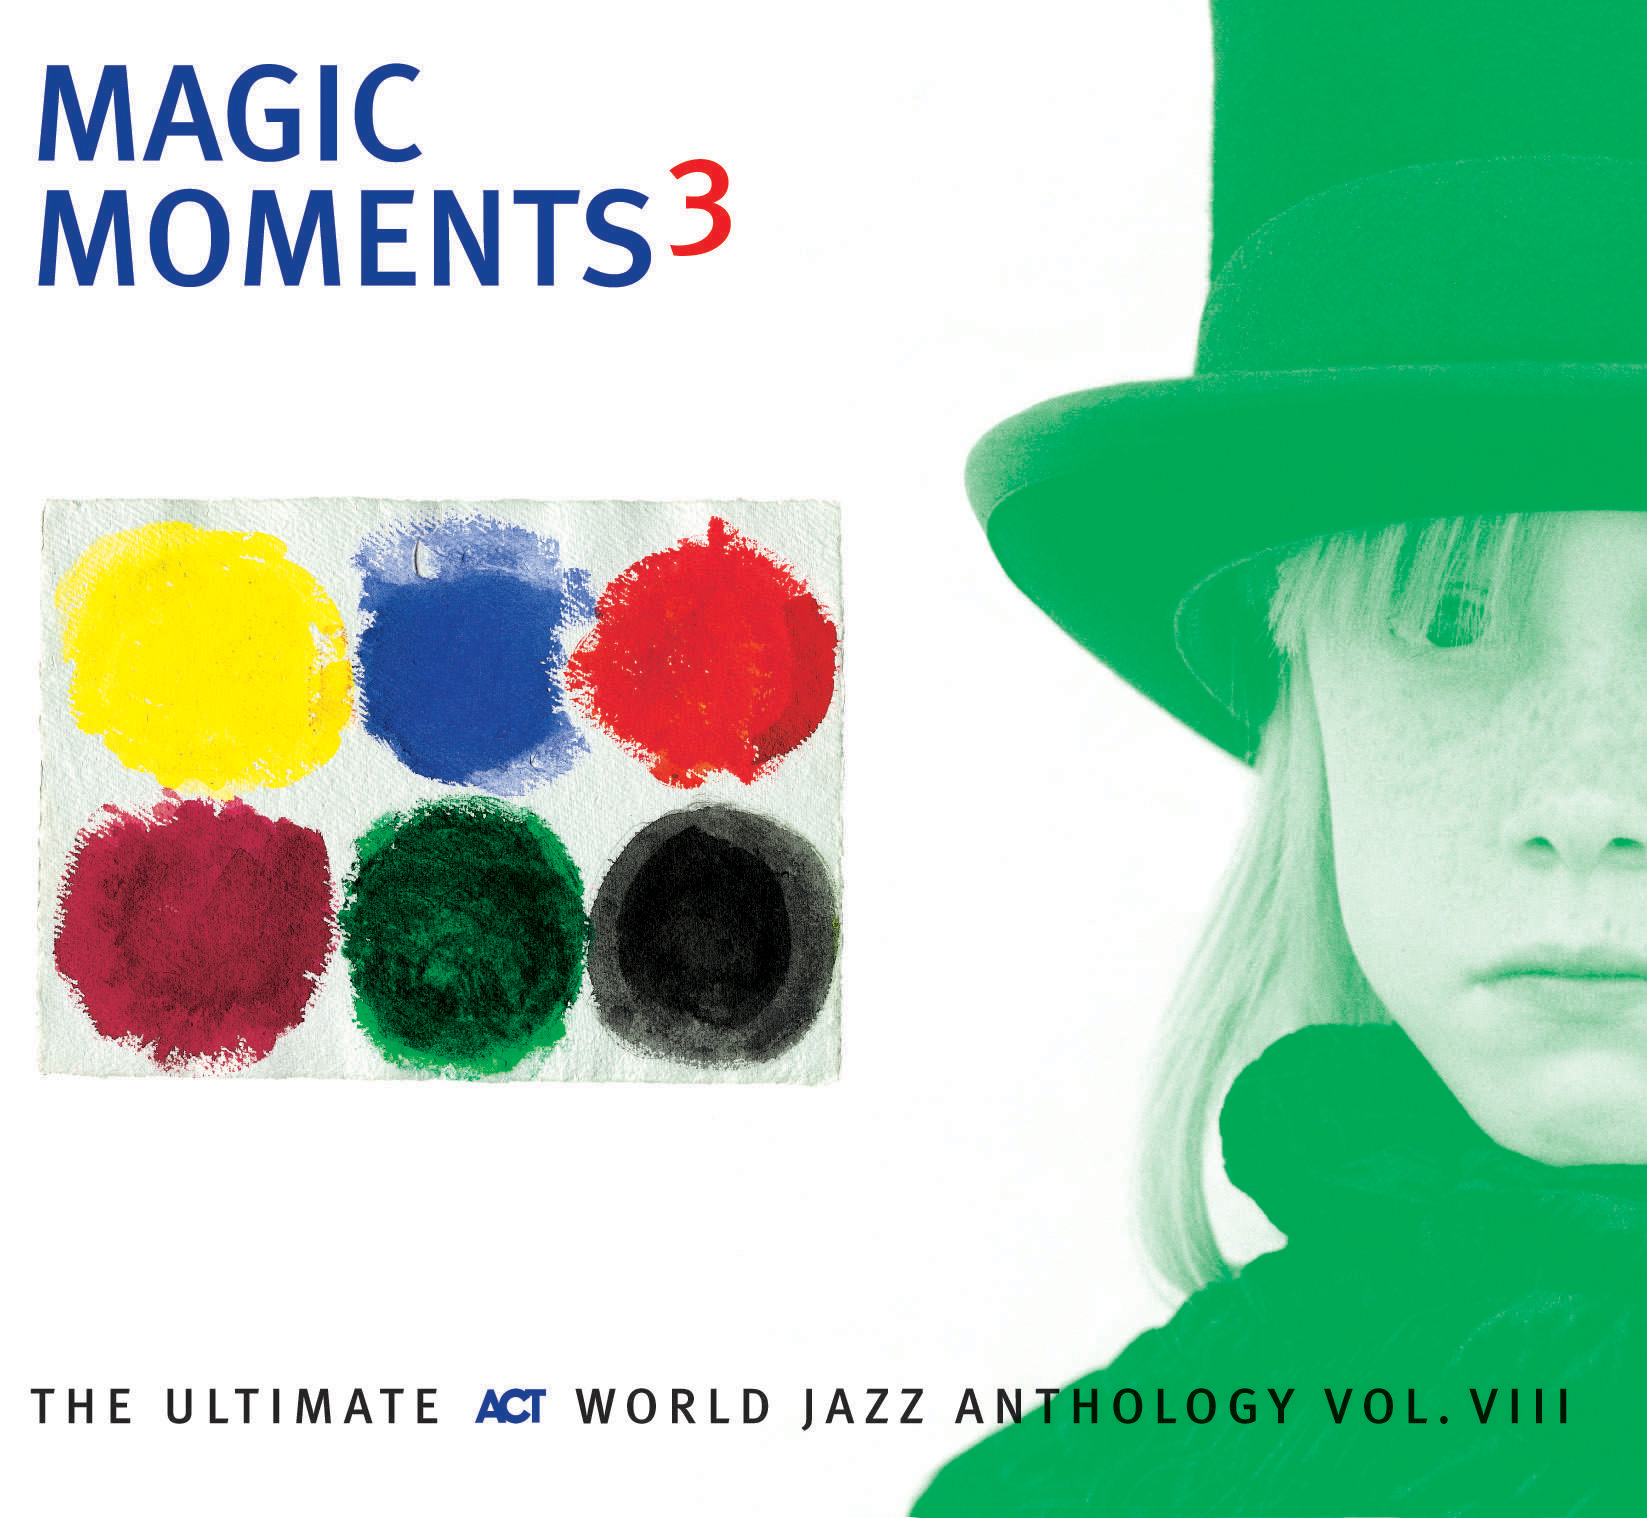 Magic Moments 3 - The Ultimate Act World Jazz Anthology Vol. VII